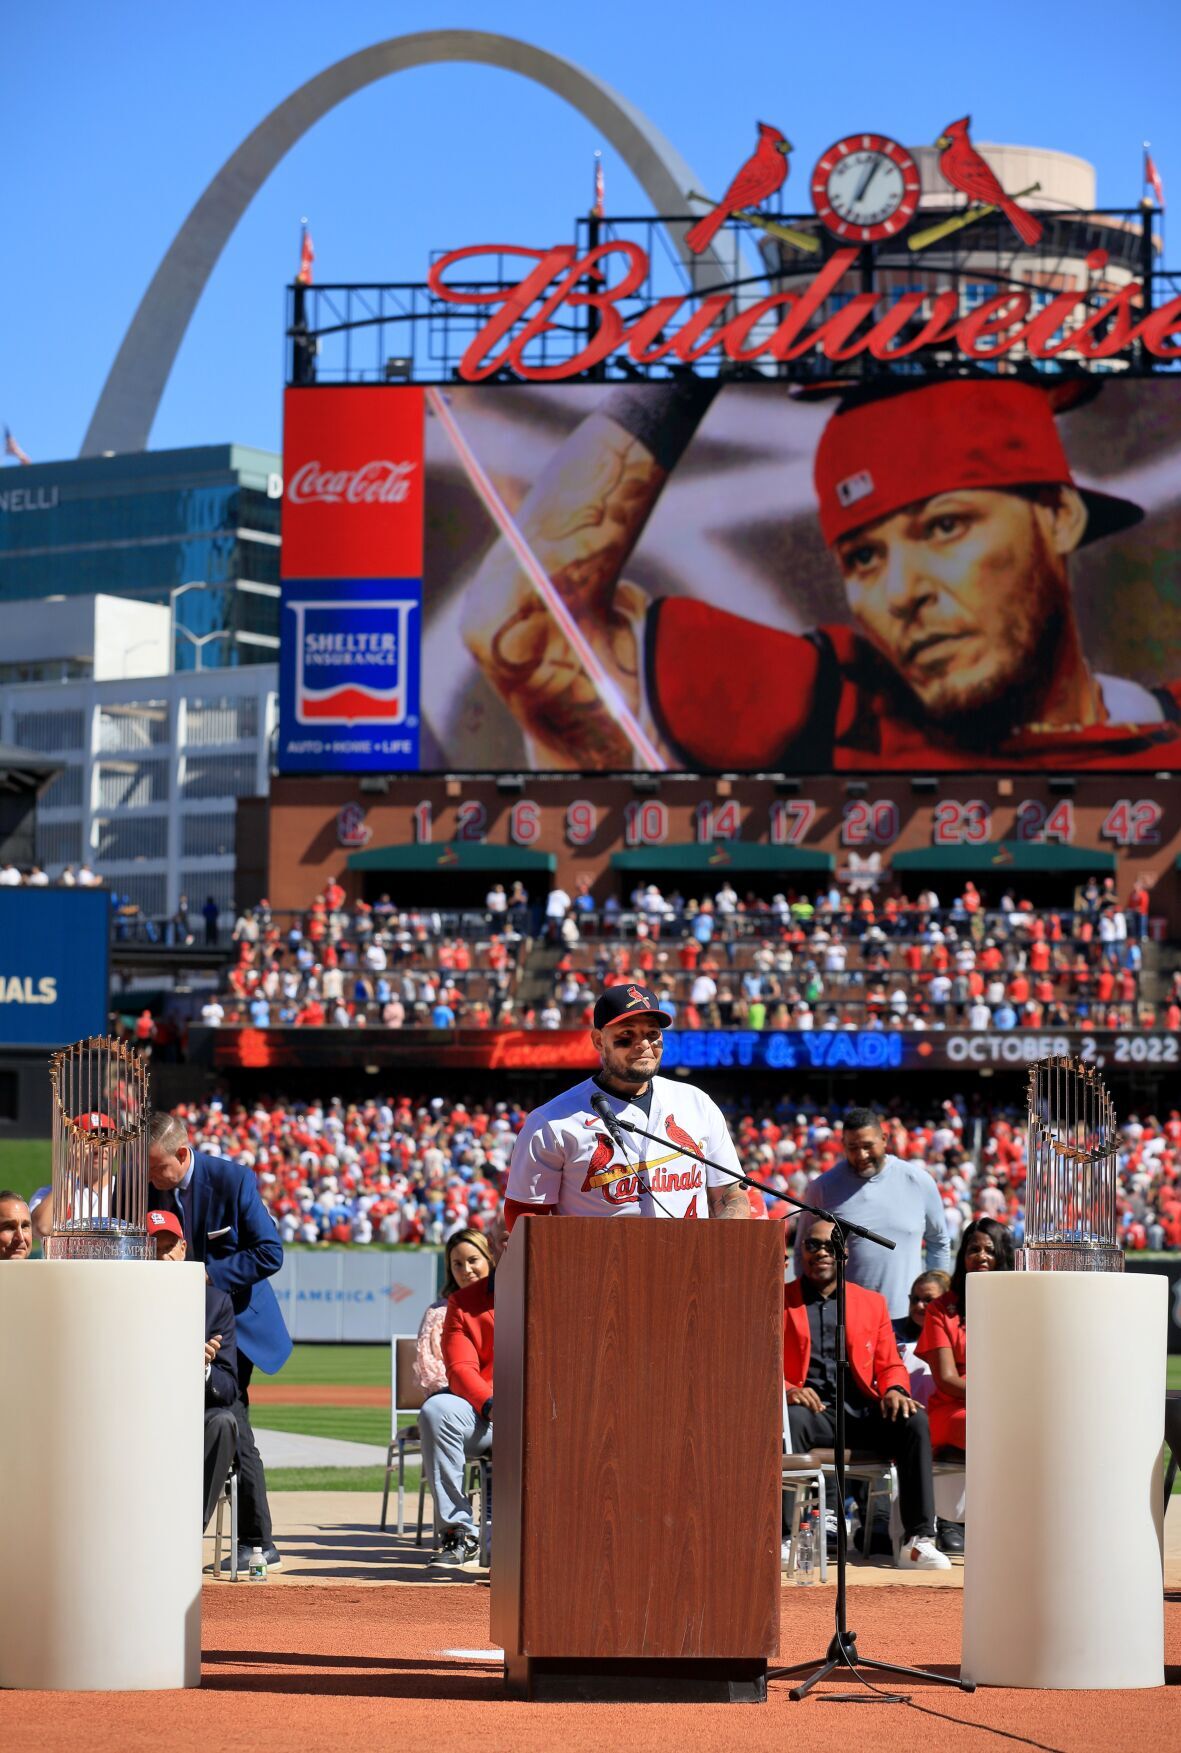 Cardinals honor Albert Pujols, Yadier Molina and Adam Wainwright